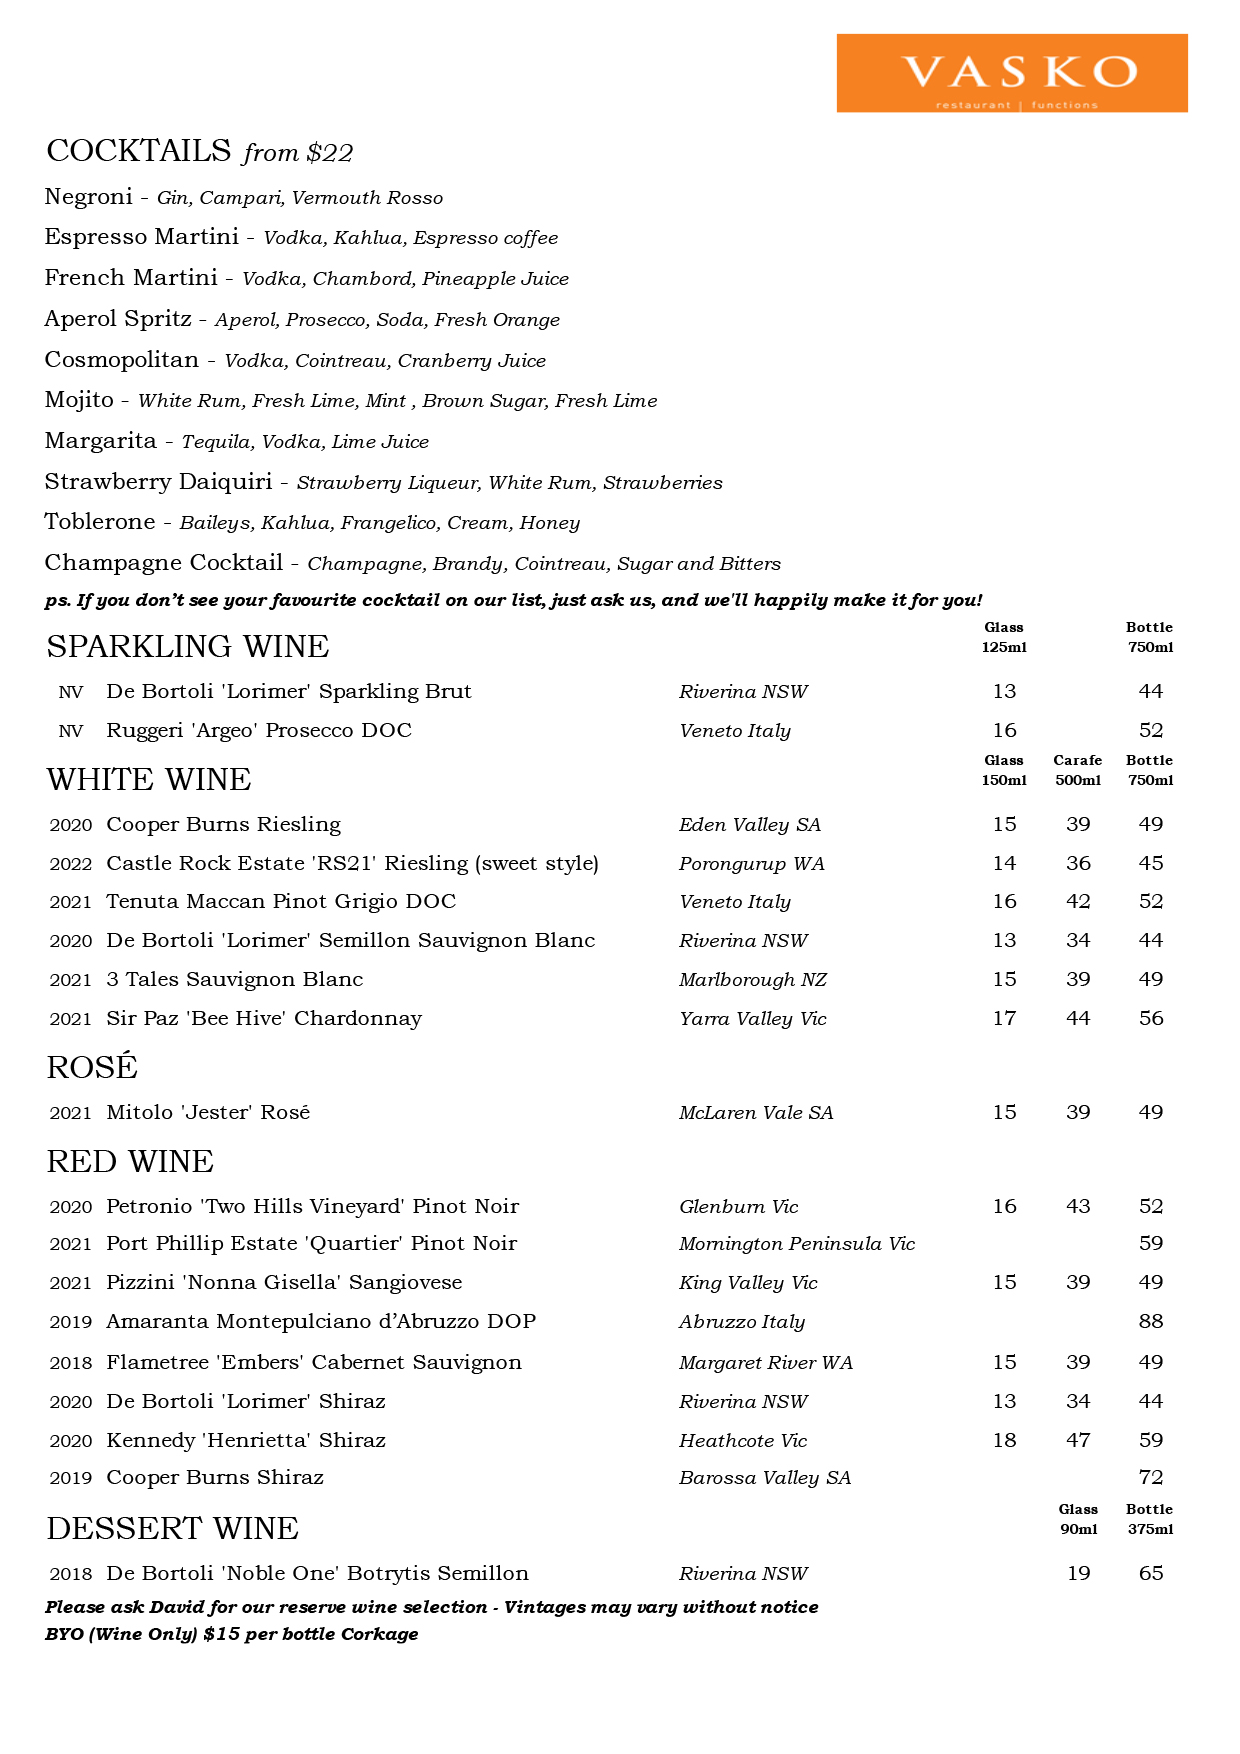 Vasko wine list July 2022